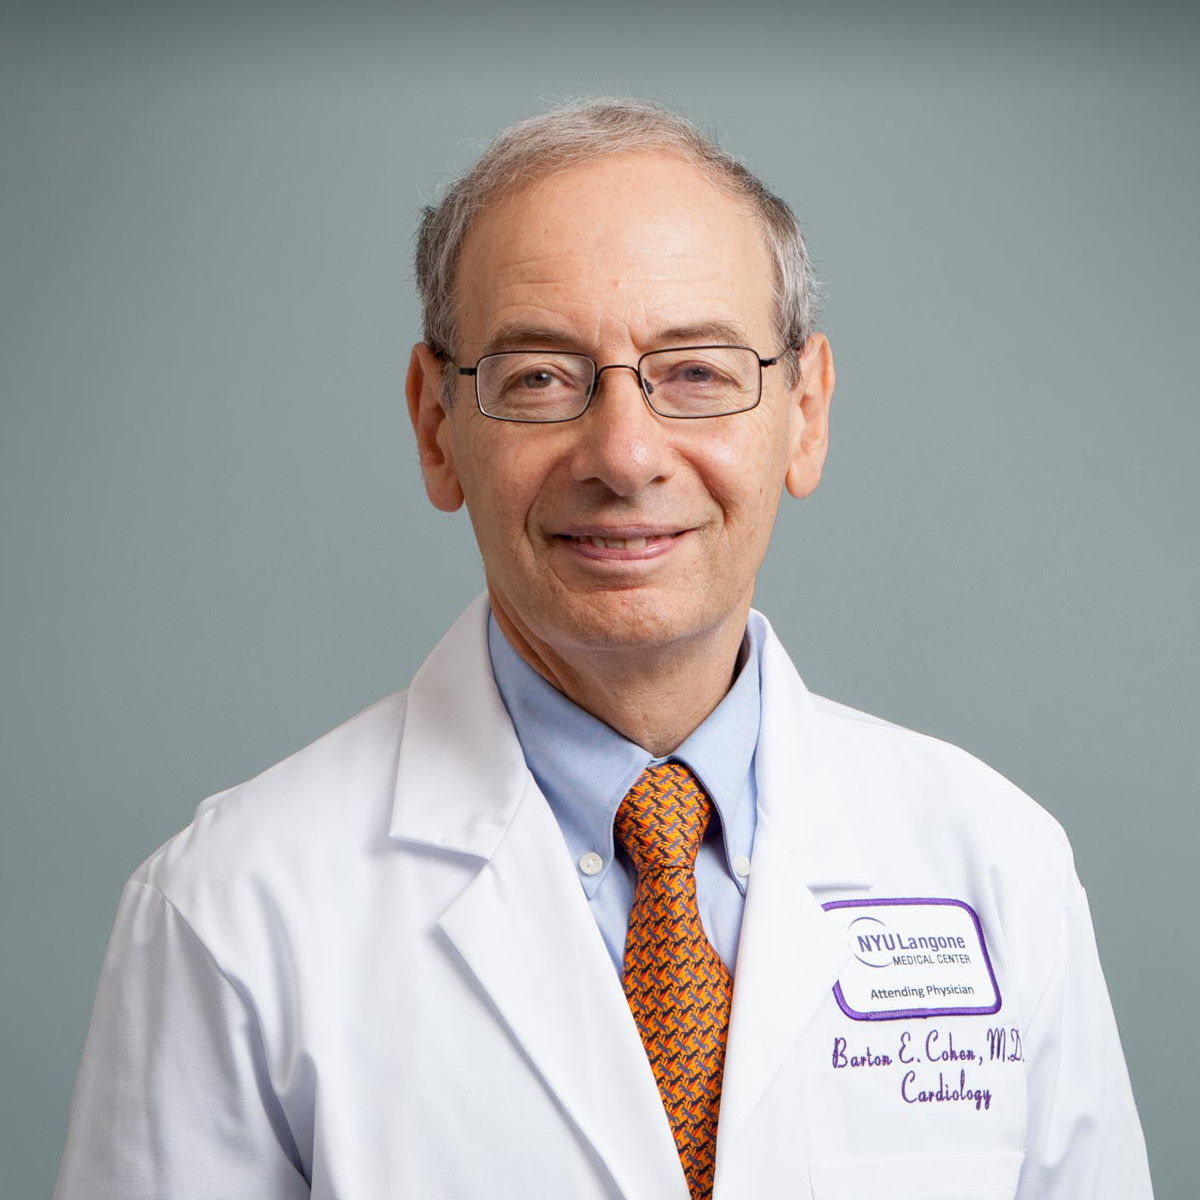 Barton Cohen,MD. Cardiology, Internal Medicine